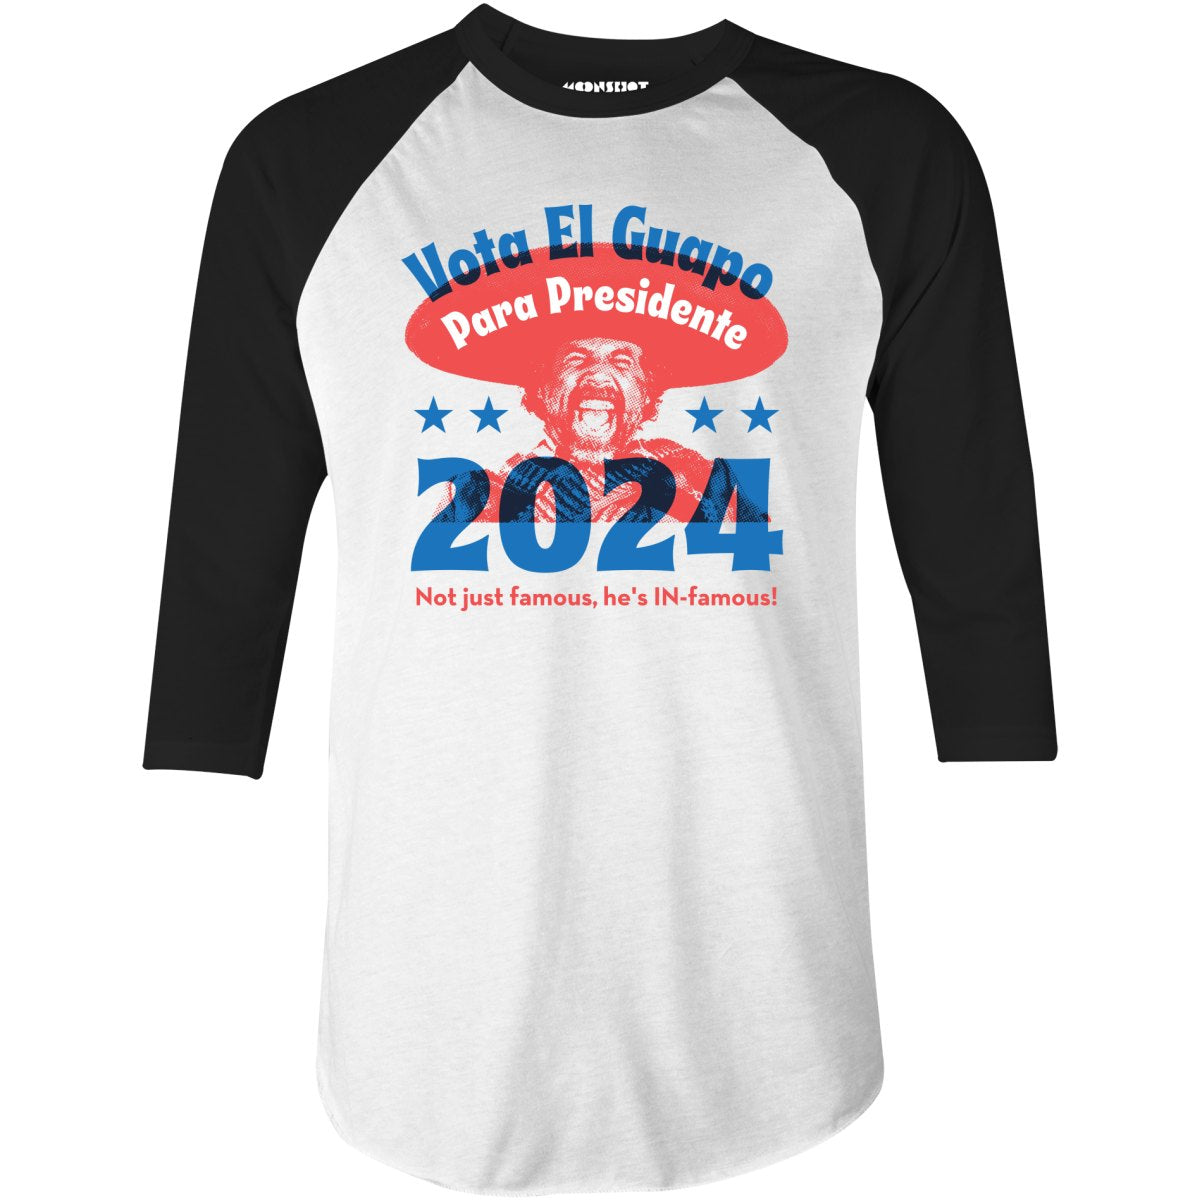 El Guapo 2024 - 3/4 Sleeve Raglan T-Shirt